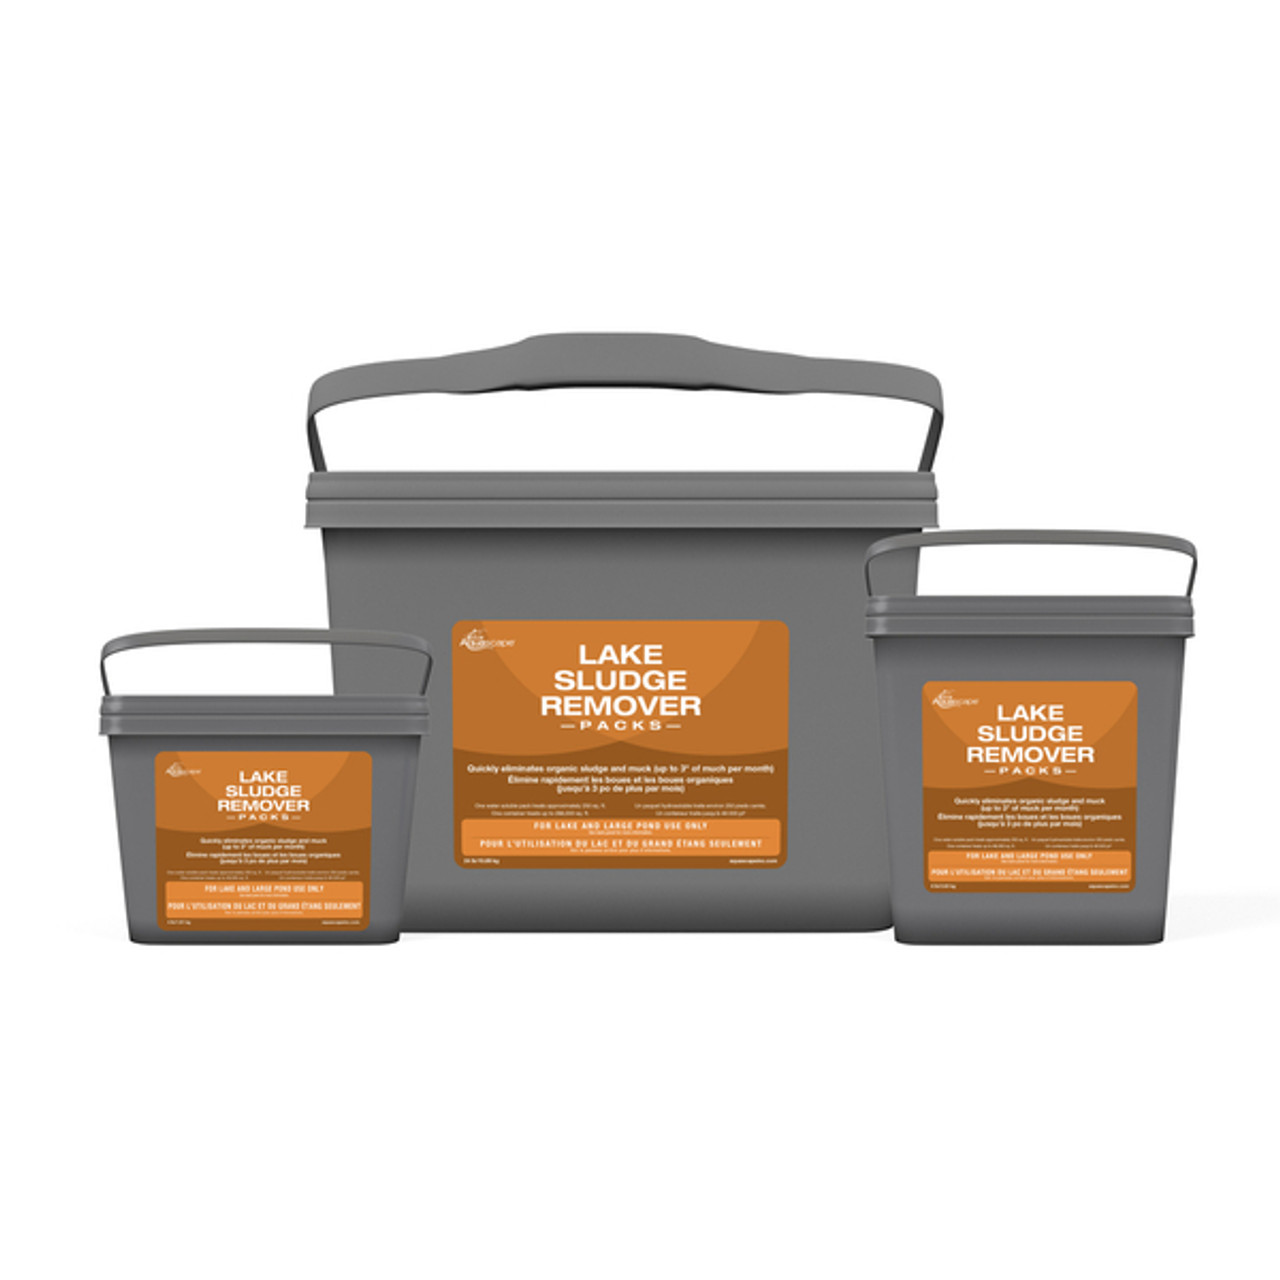 Aquascape Lake Sludge Remover Packs - 192 Packs (4 lbs)